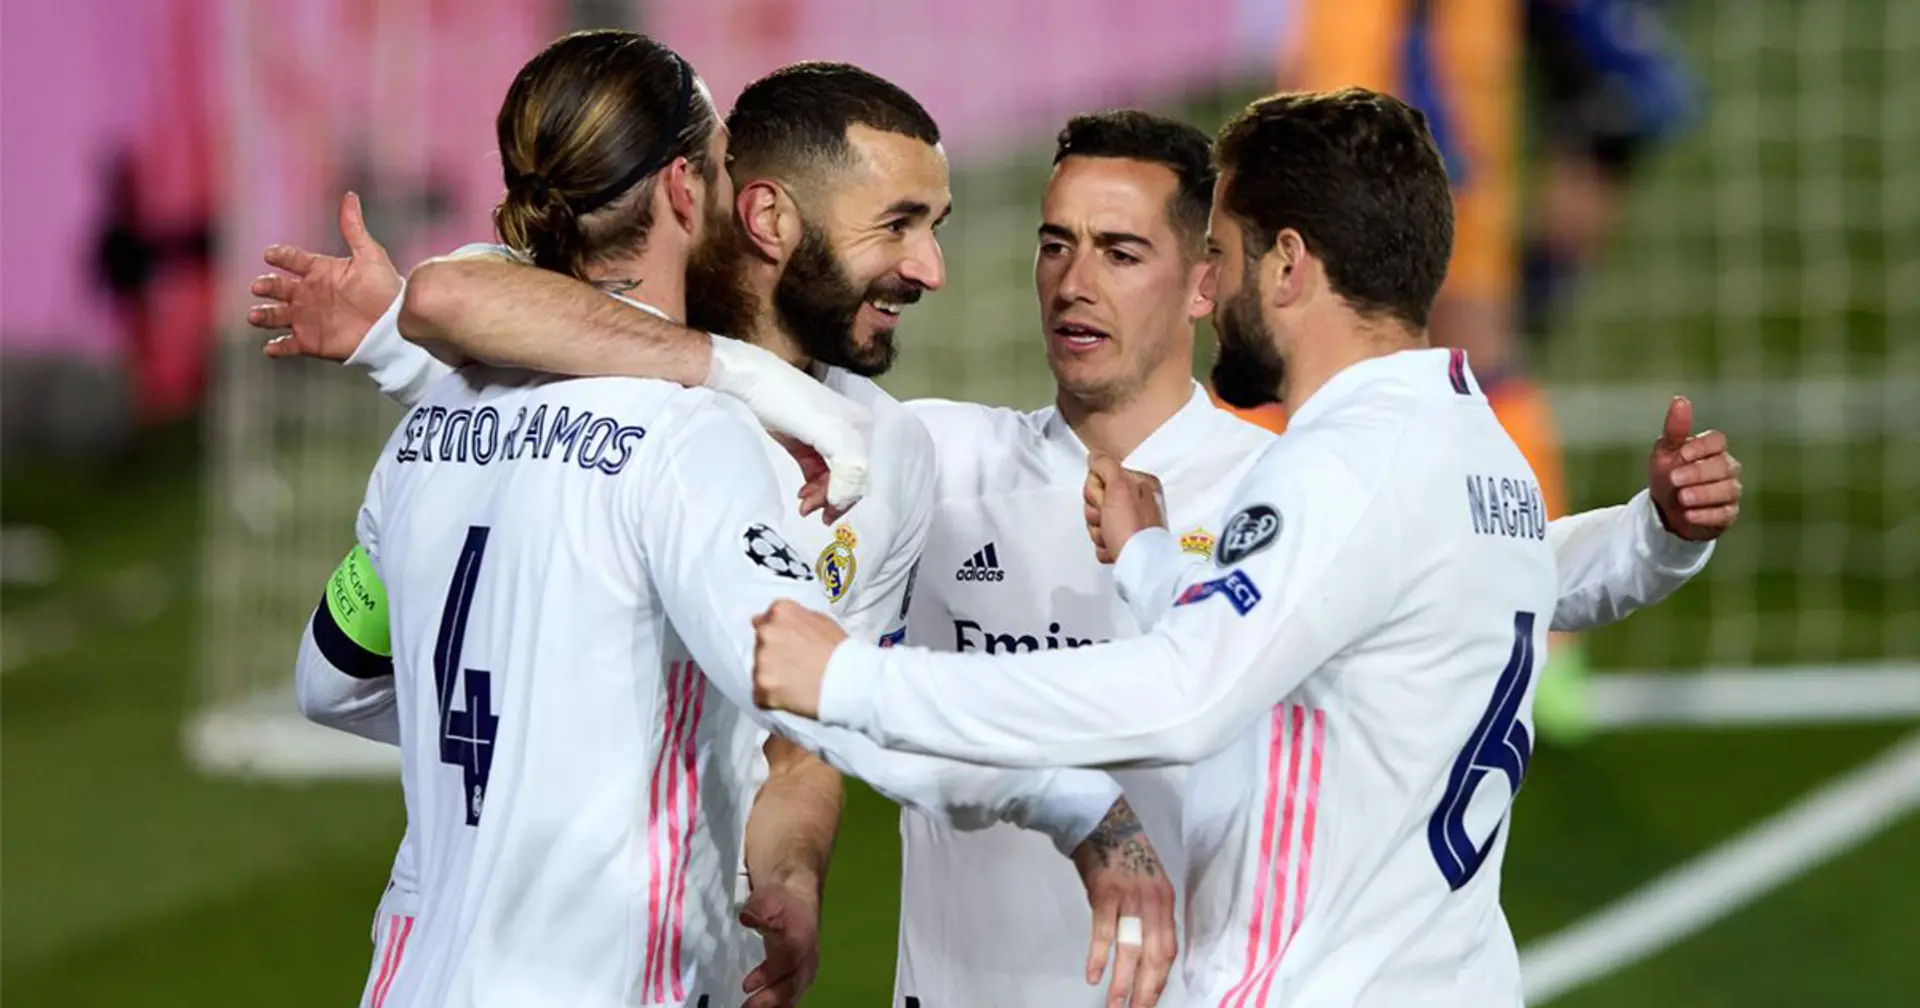 Real Madrid set impressive unbeaten streak – their best since last winter